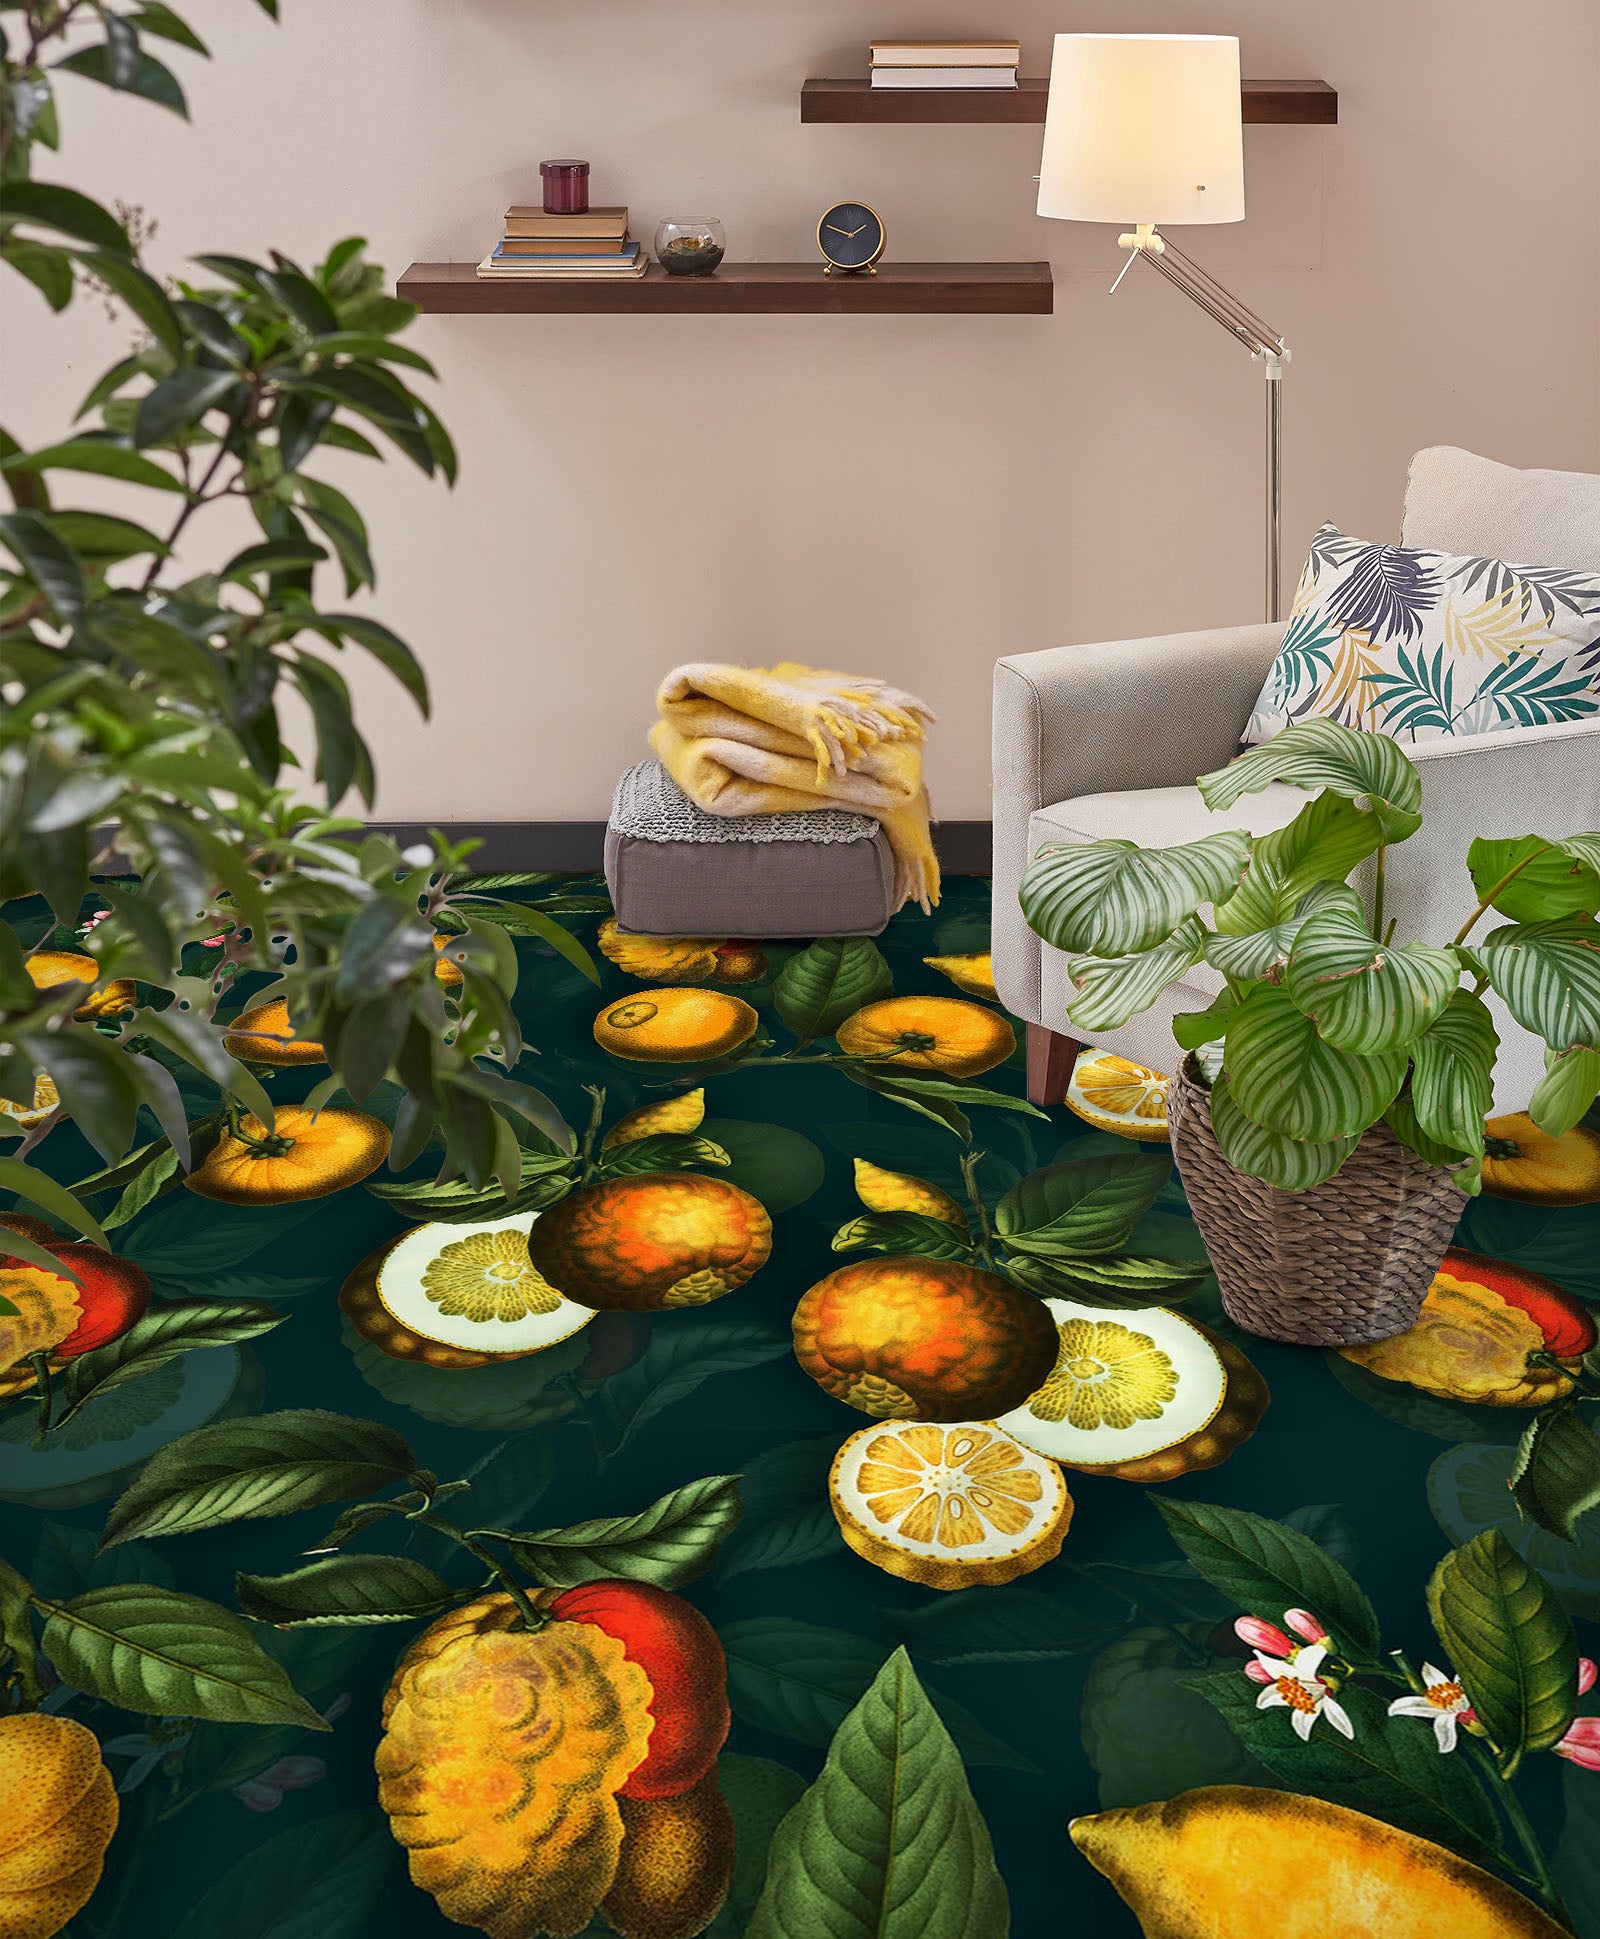 3D Leaves Fruit 10001 Uta Naumann Floor Mural  Wallpaper Murals Self-Adhesive Removable Print Epoxy